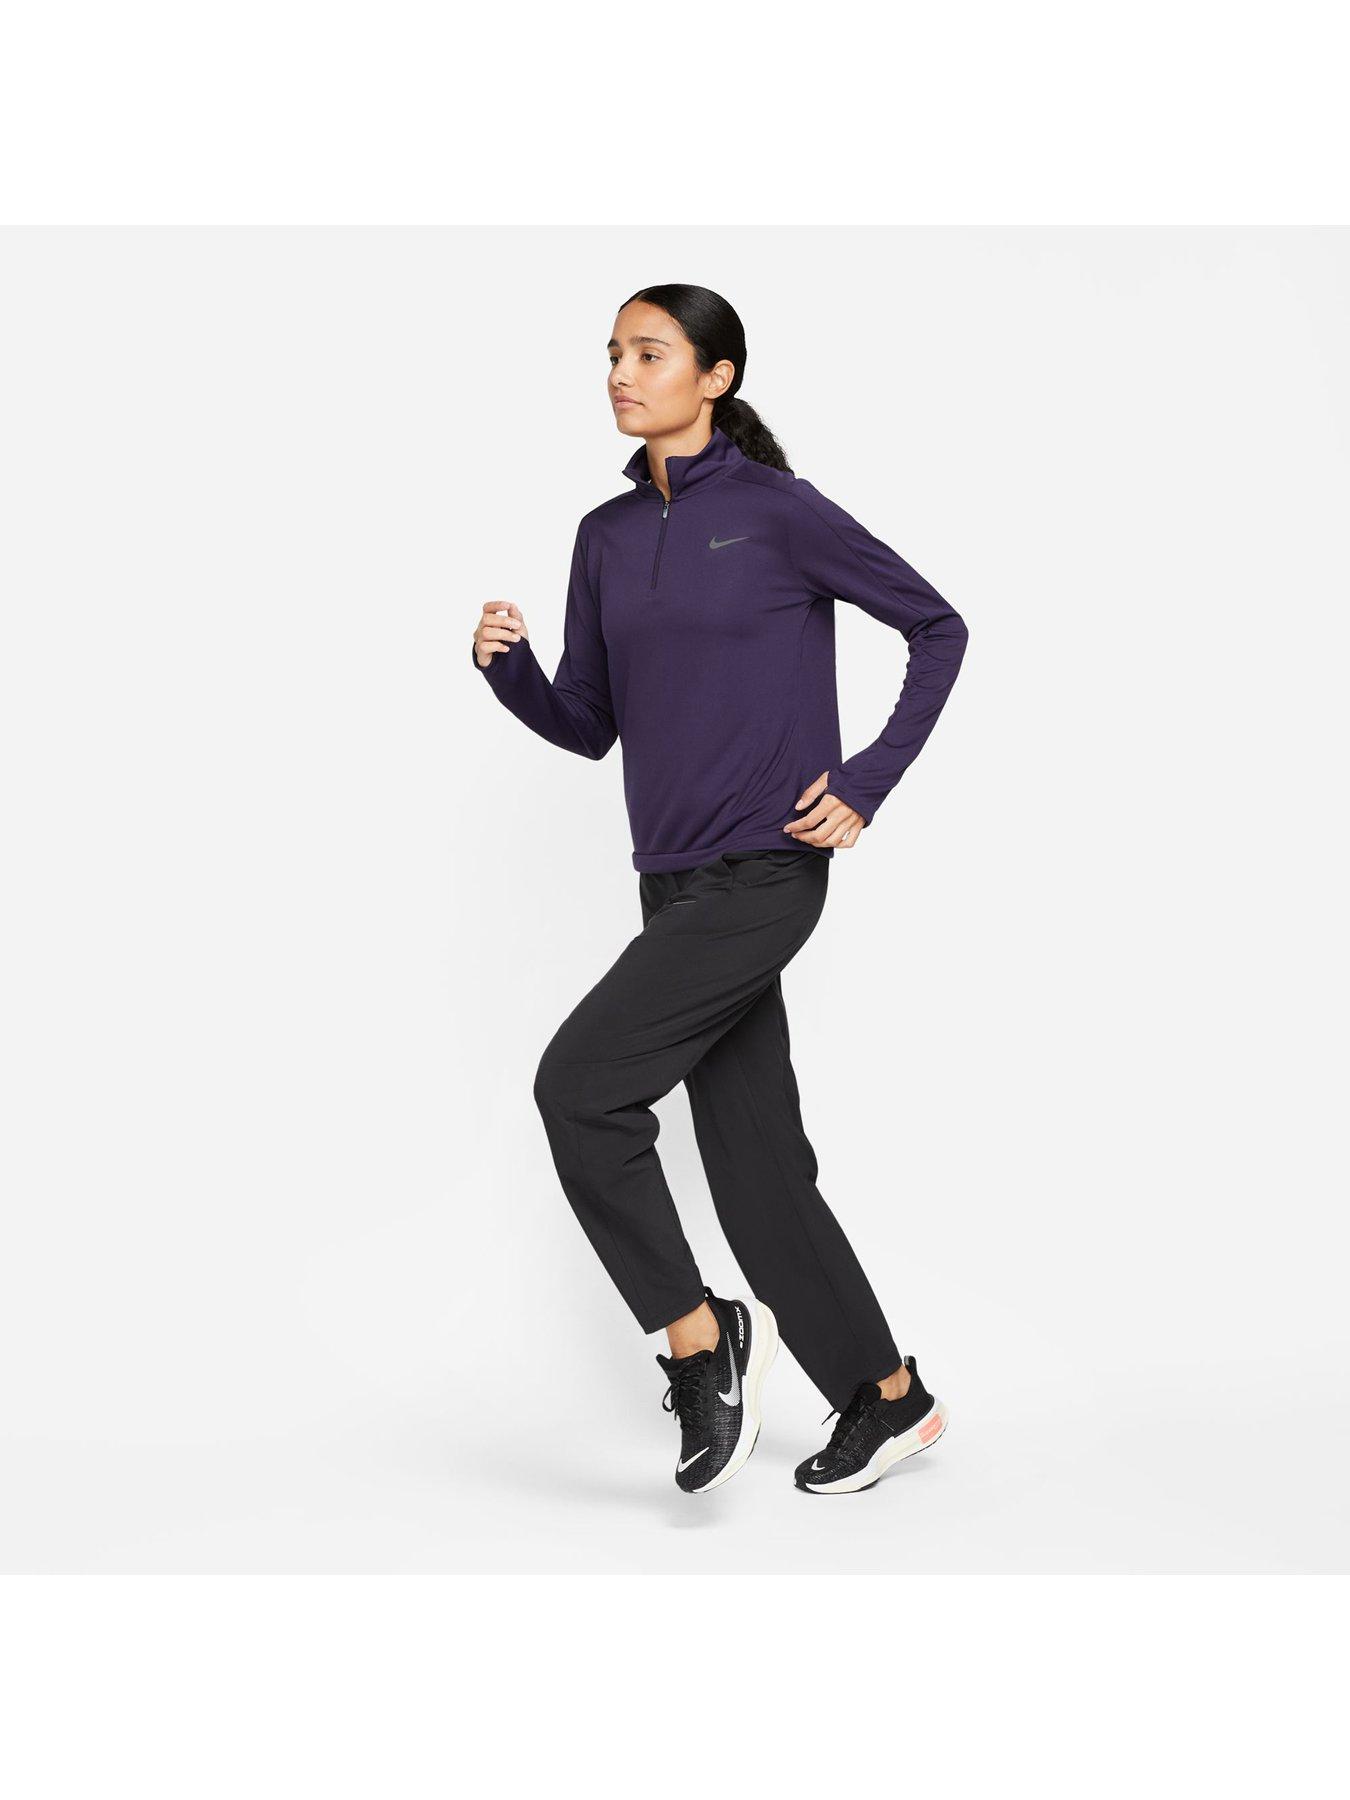 Brand New Nike Bralette, Women's Fashion, Activewear on Carousell